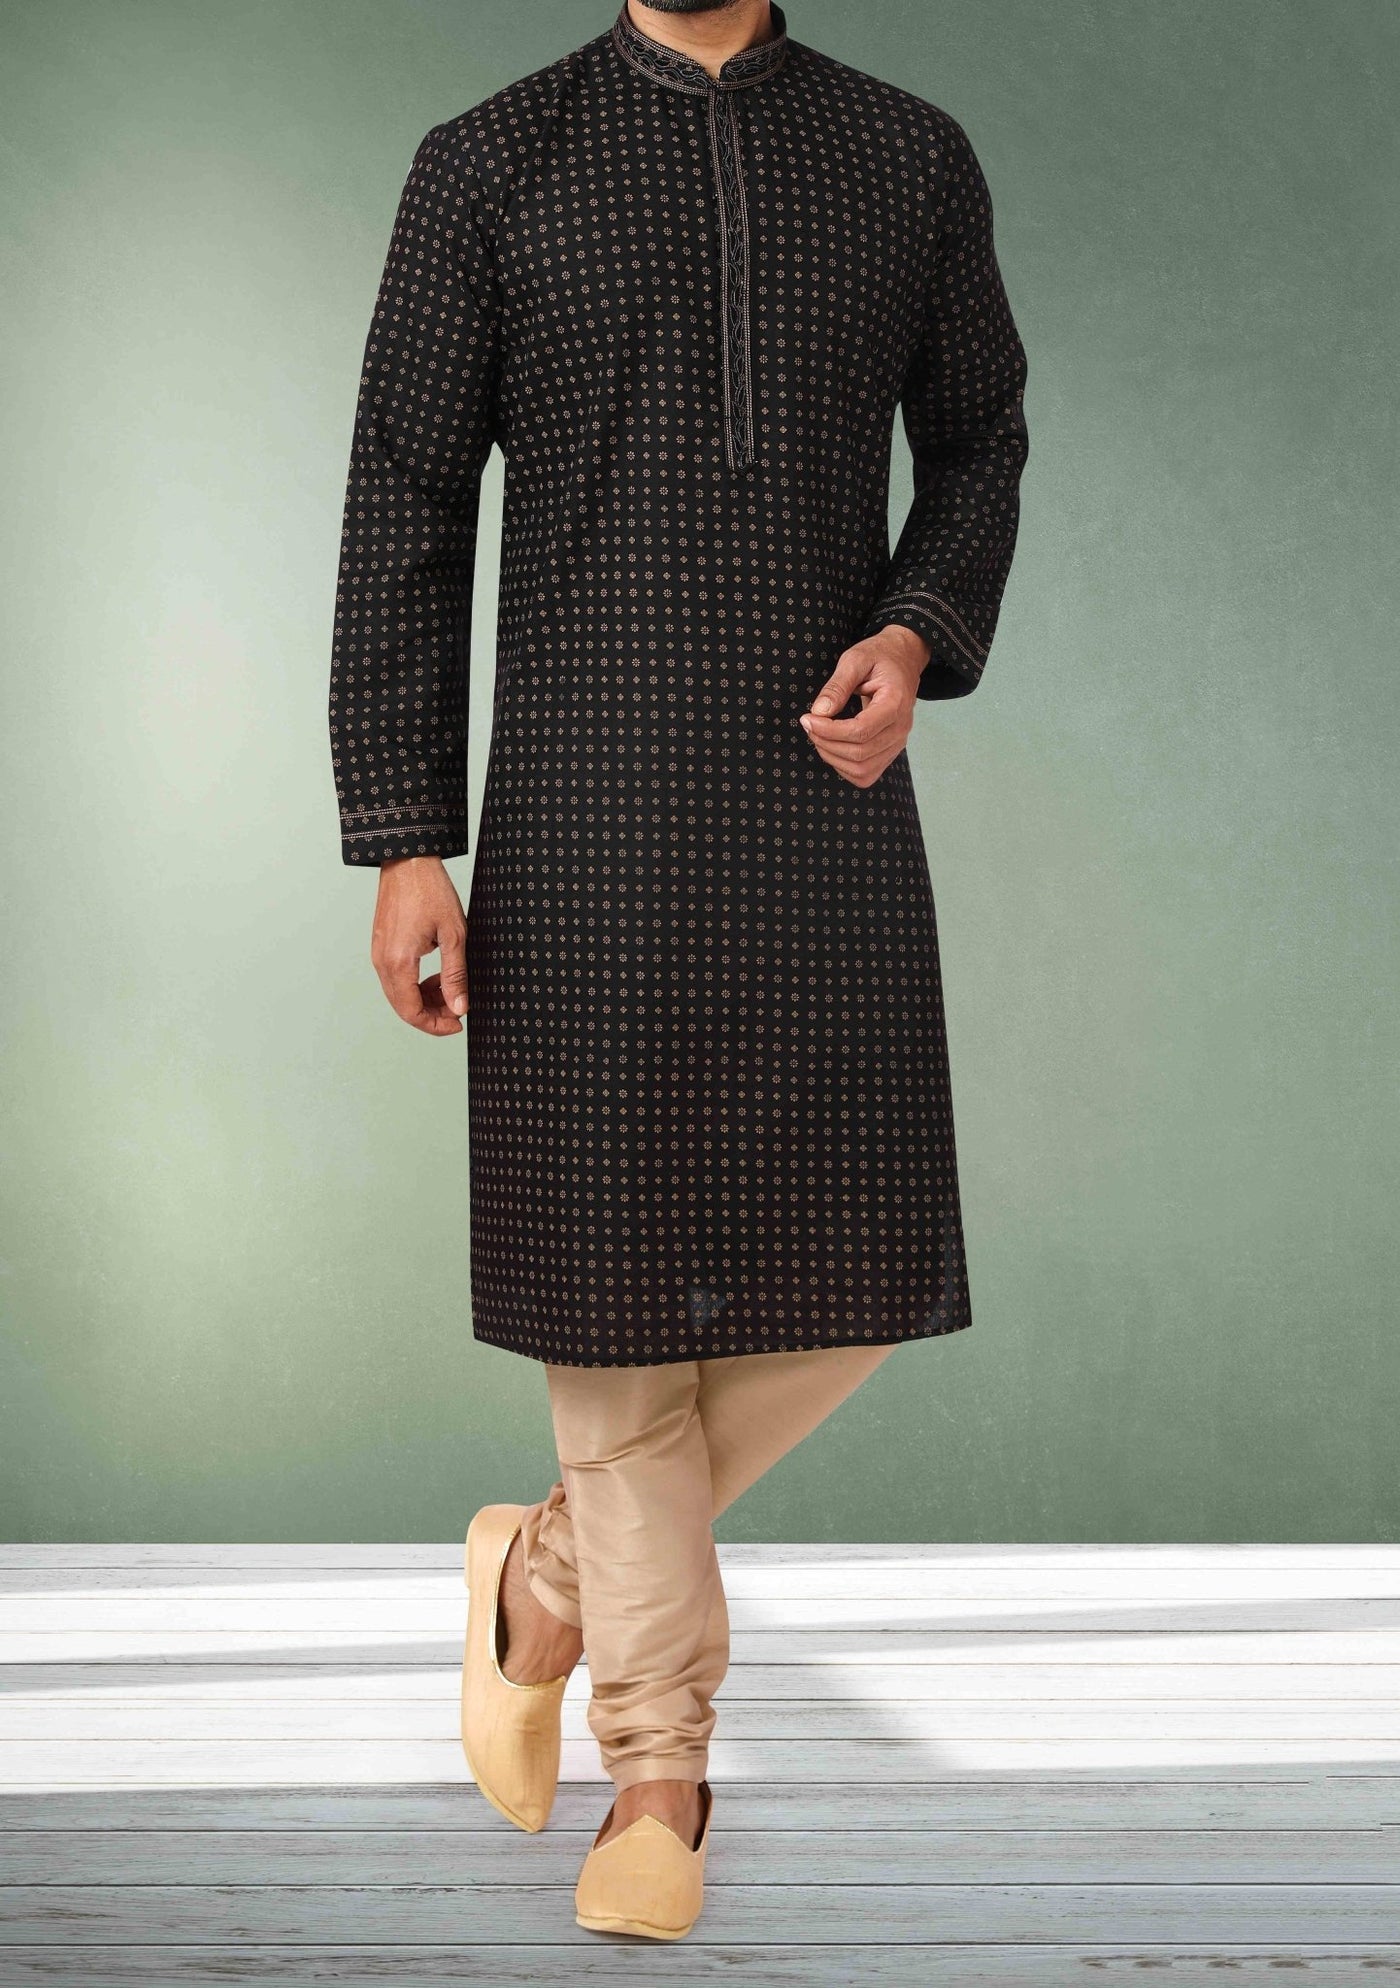 Indian Wedding Dress for Men Clothing 2 PC Suit Kurta Pajama Button Down  Shirt | eBay